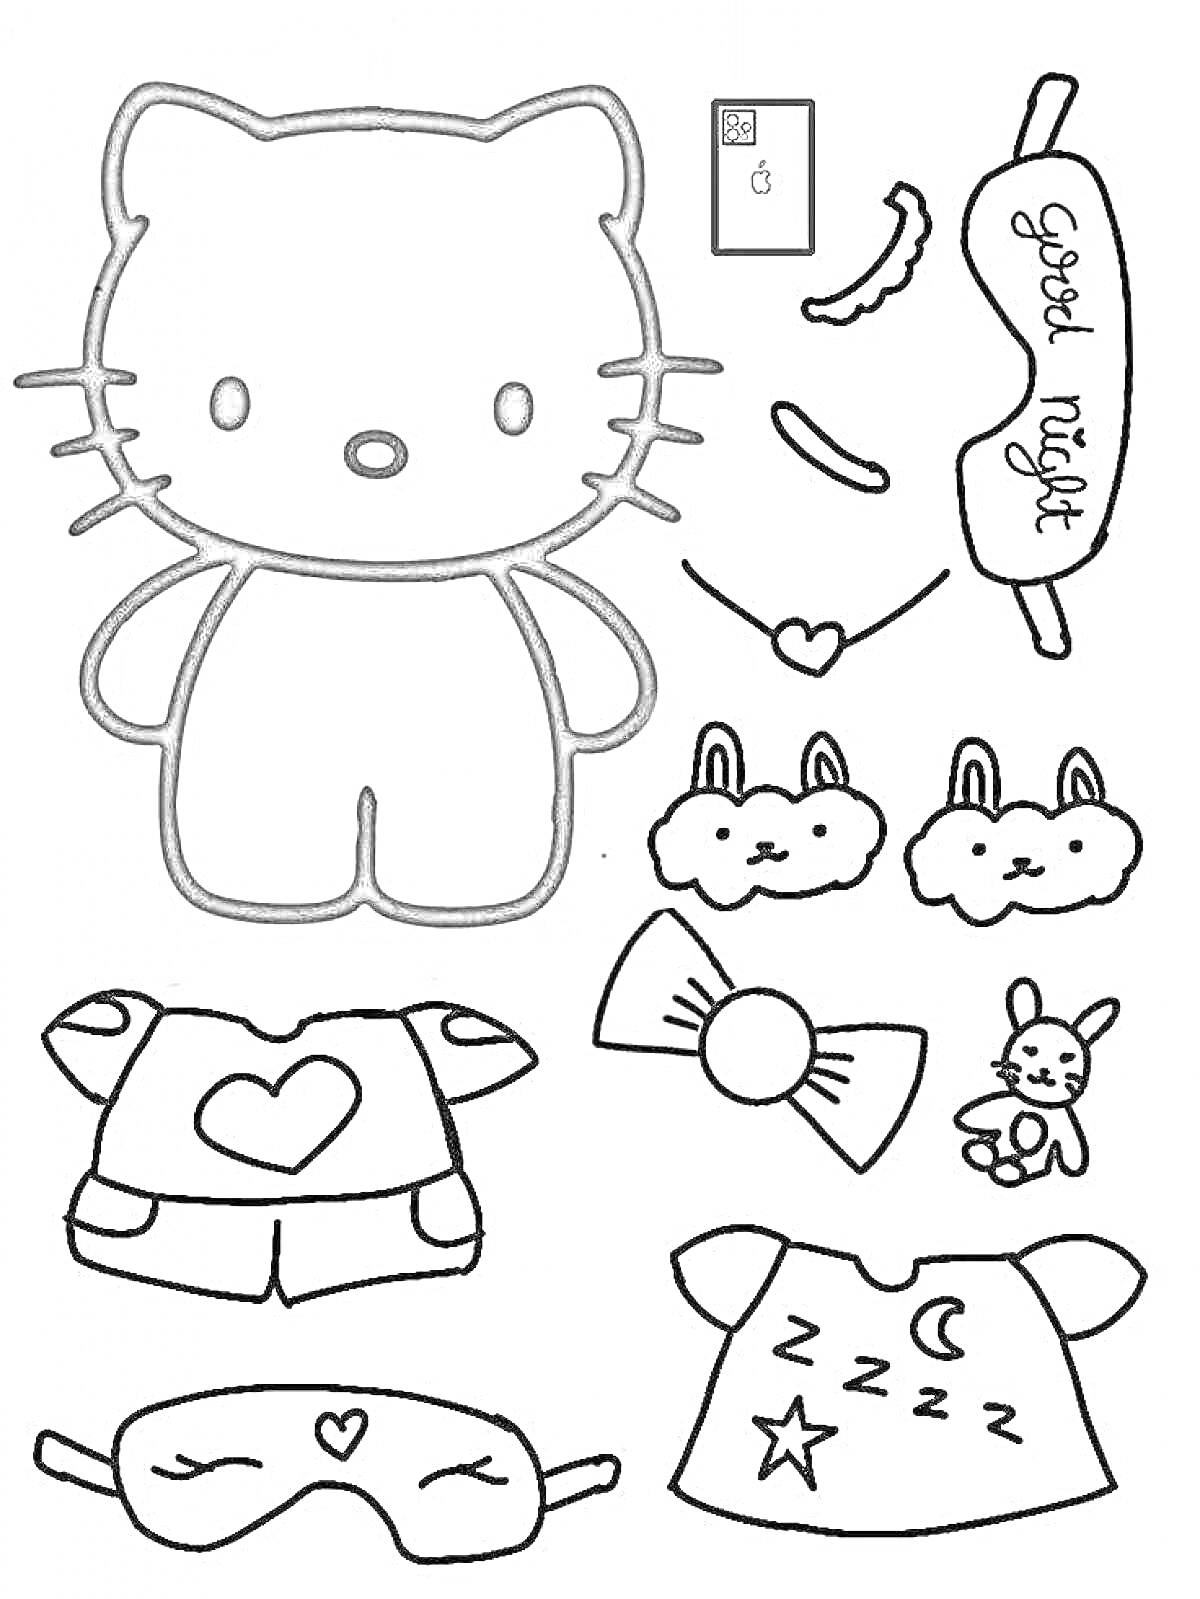 Hello Kitty с комплектом одежды и аксессуаров для сна (маска для сна, пижама, носки, тапочки, игрушка, подушка)